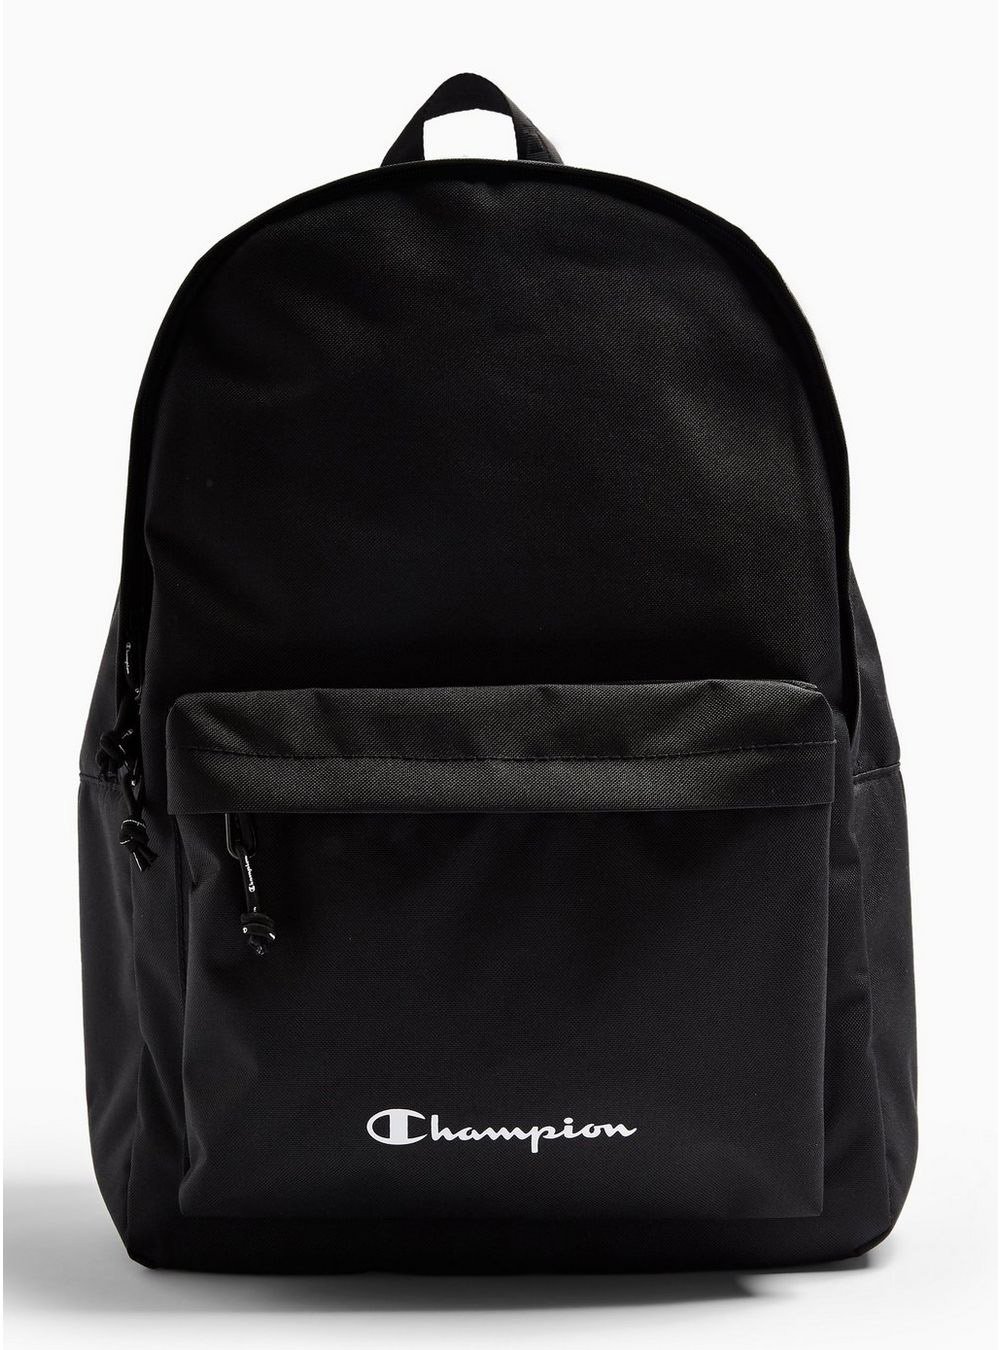 champion bag black